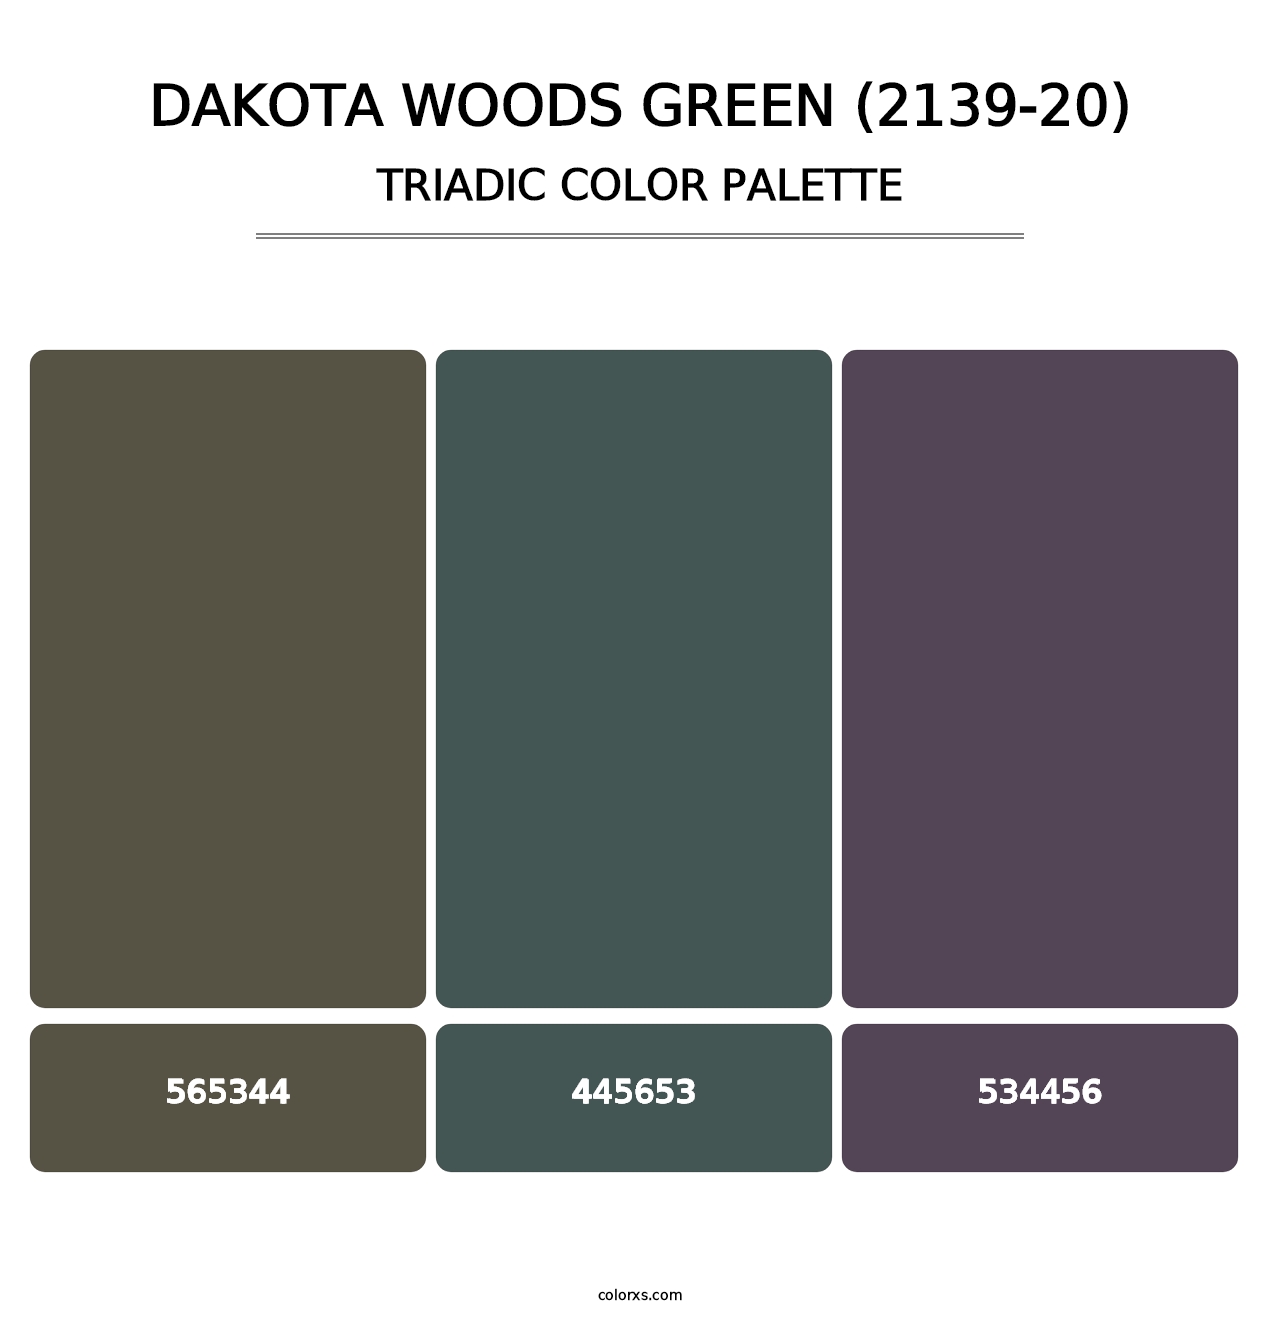 Dakota Woods Green (2139-20) - Triadic Color Palette